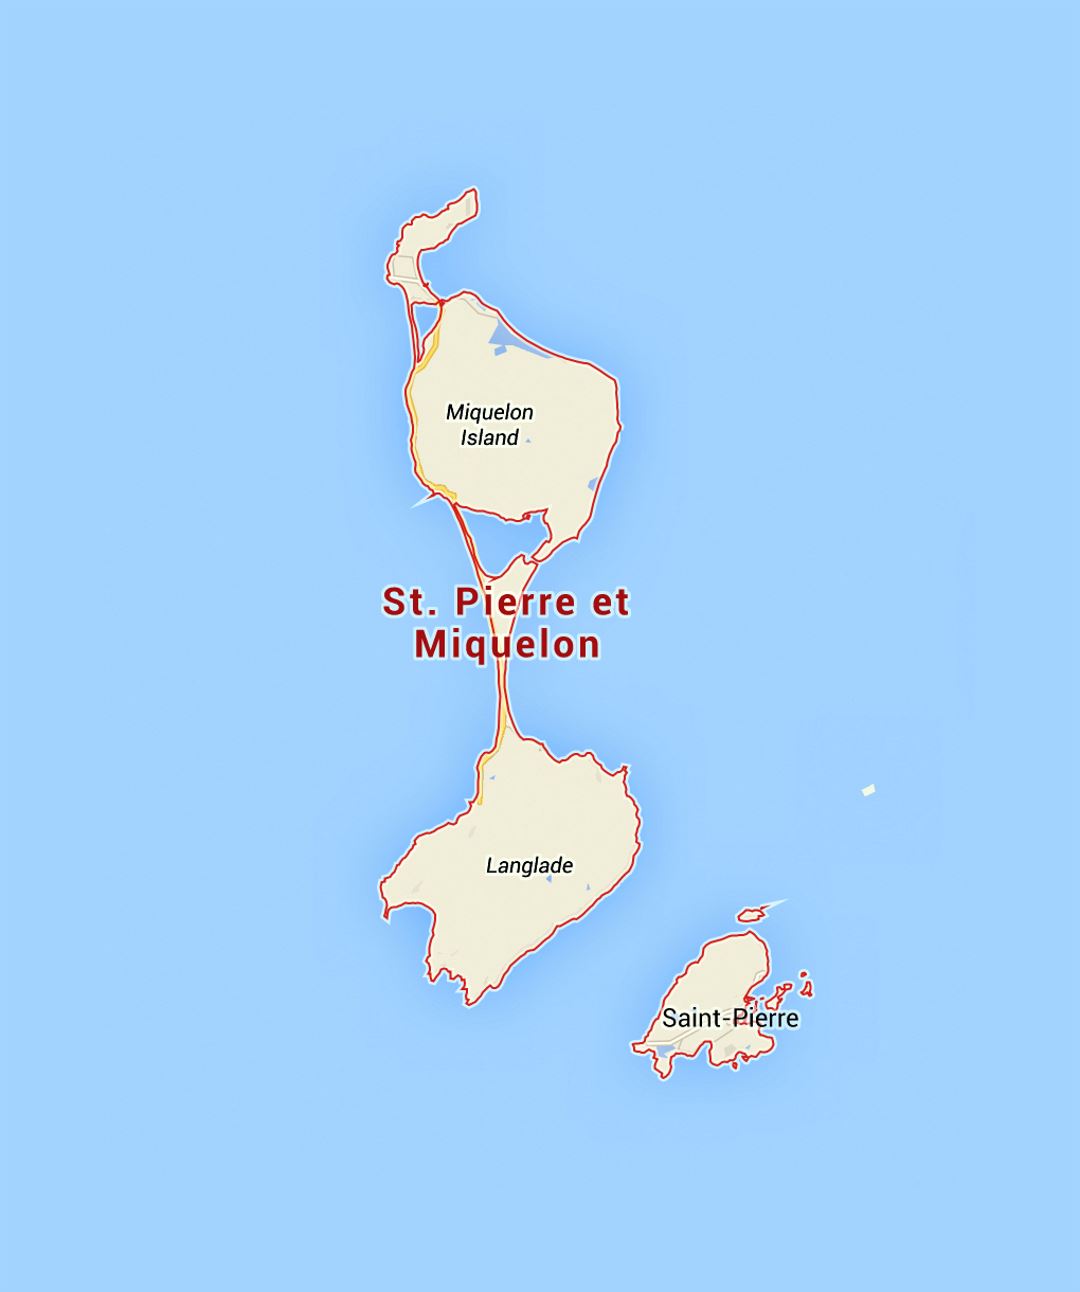 Detailed map of Saint Pierre and Miquelon